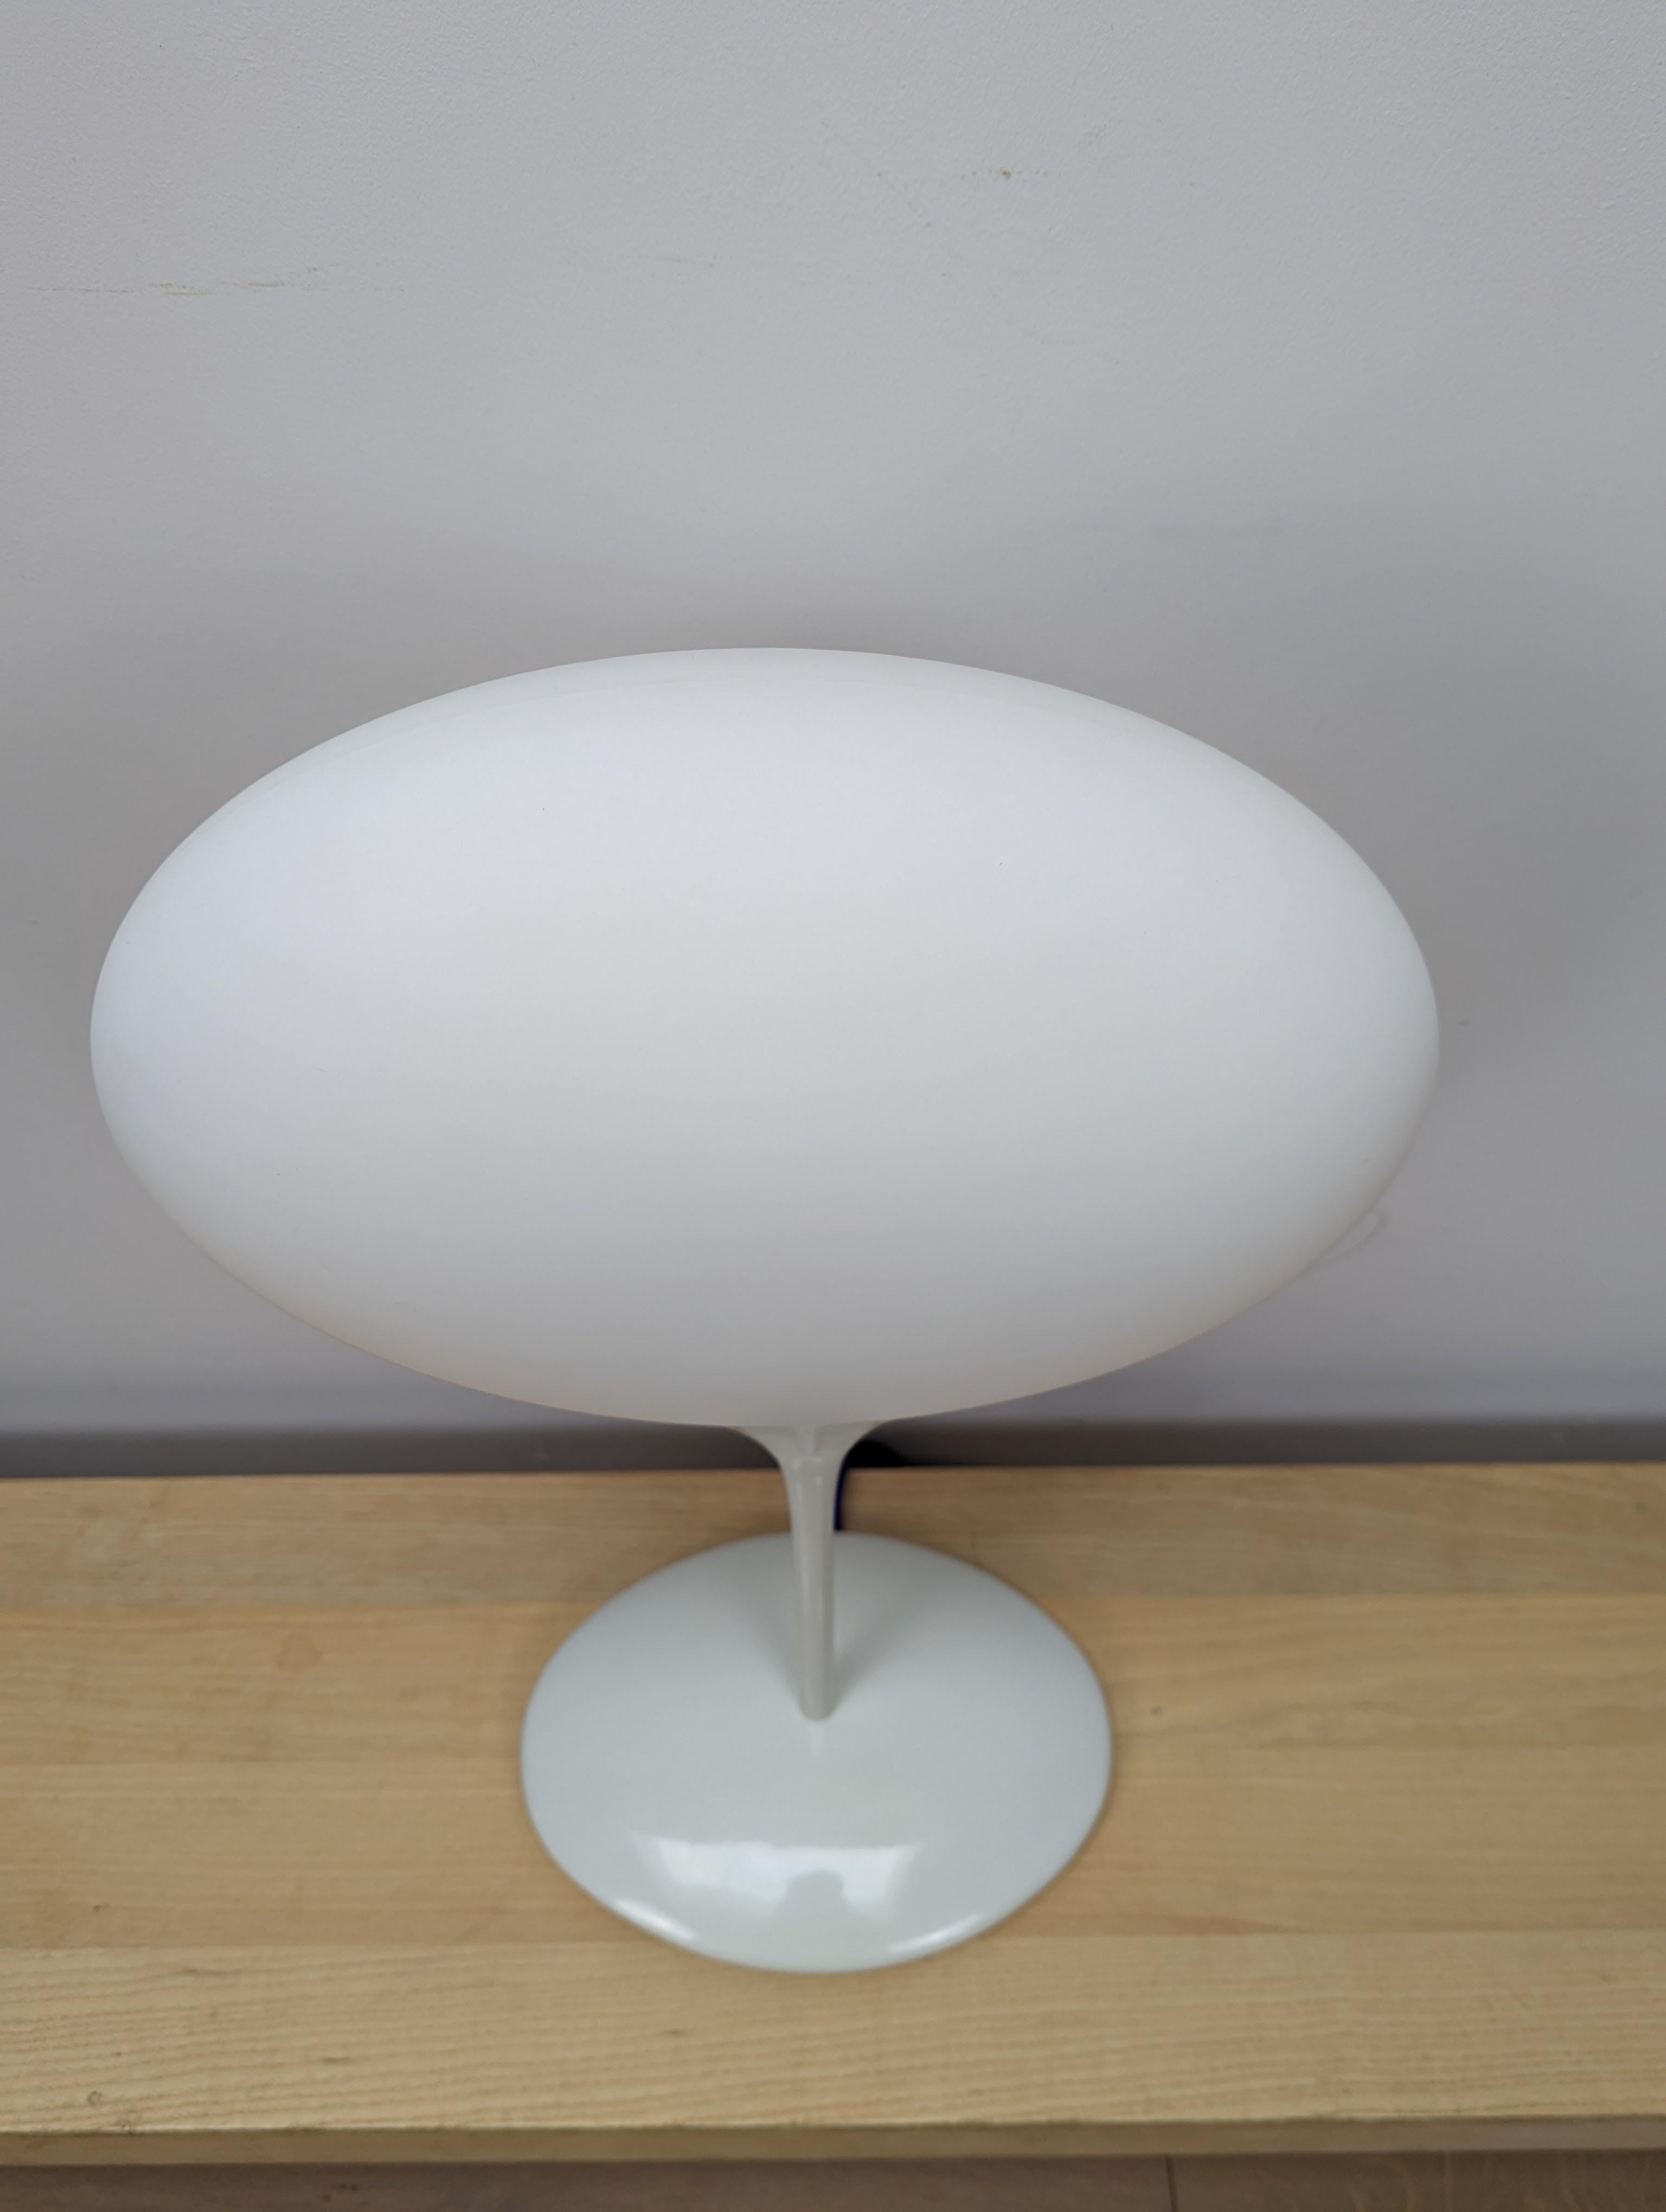 Conran Lighting Nimbus Bedside Table Lamp In Good Condition For Sale In Tunbridge Wells, GB